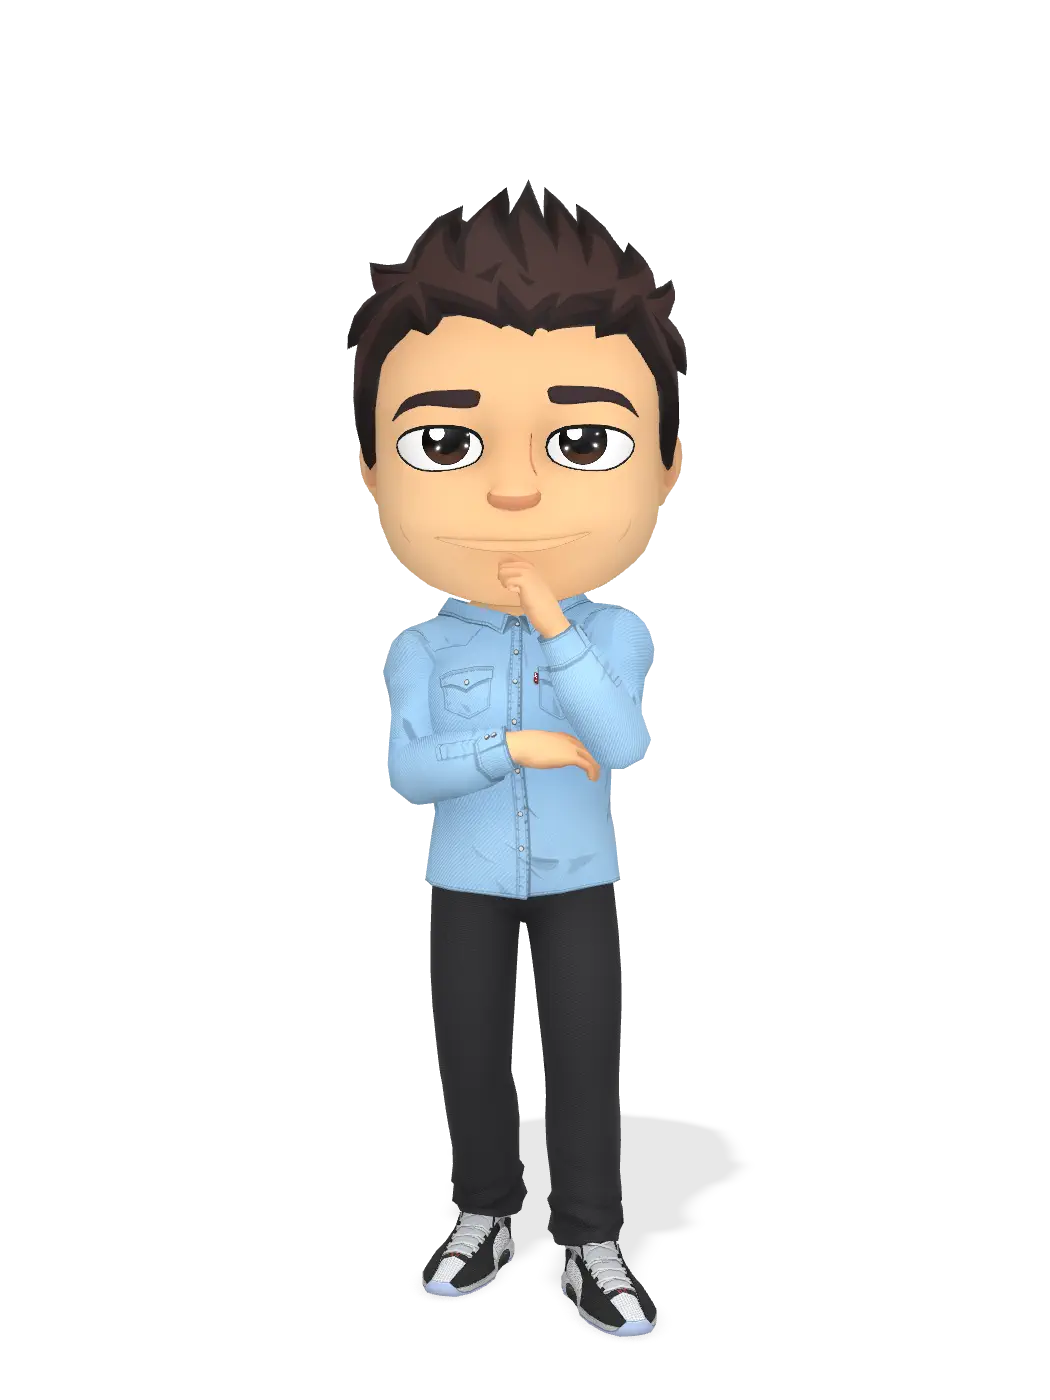 3D Bitmoji for mathiascharman avatar